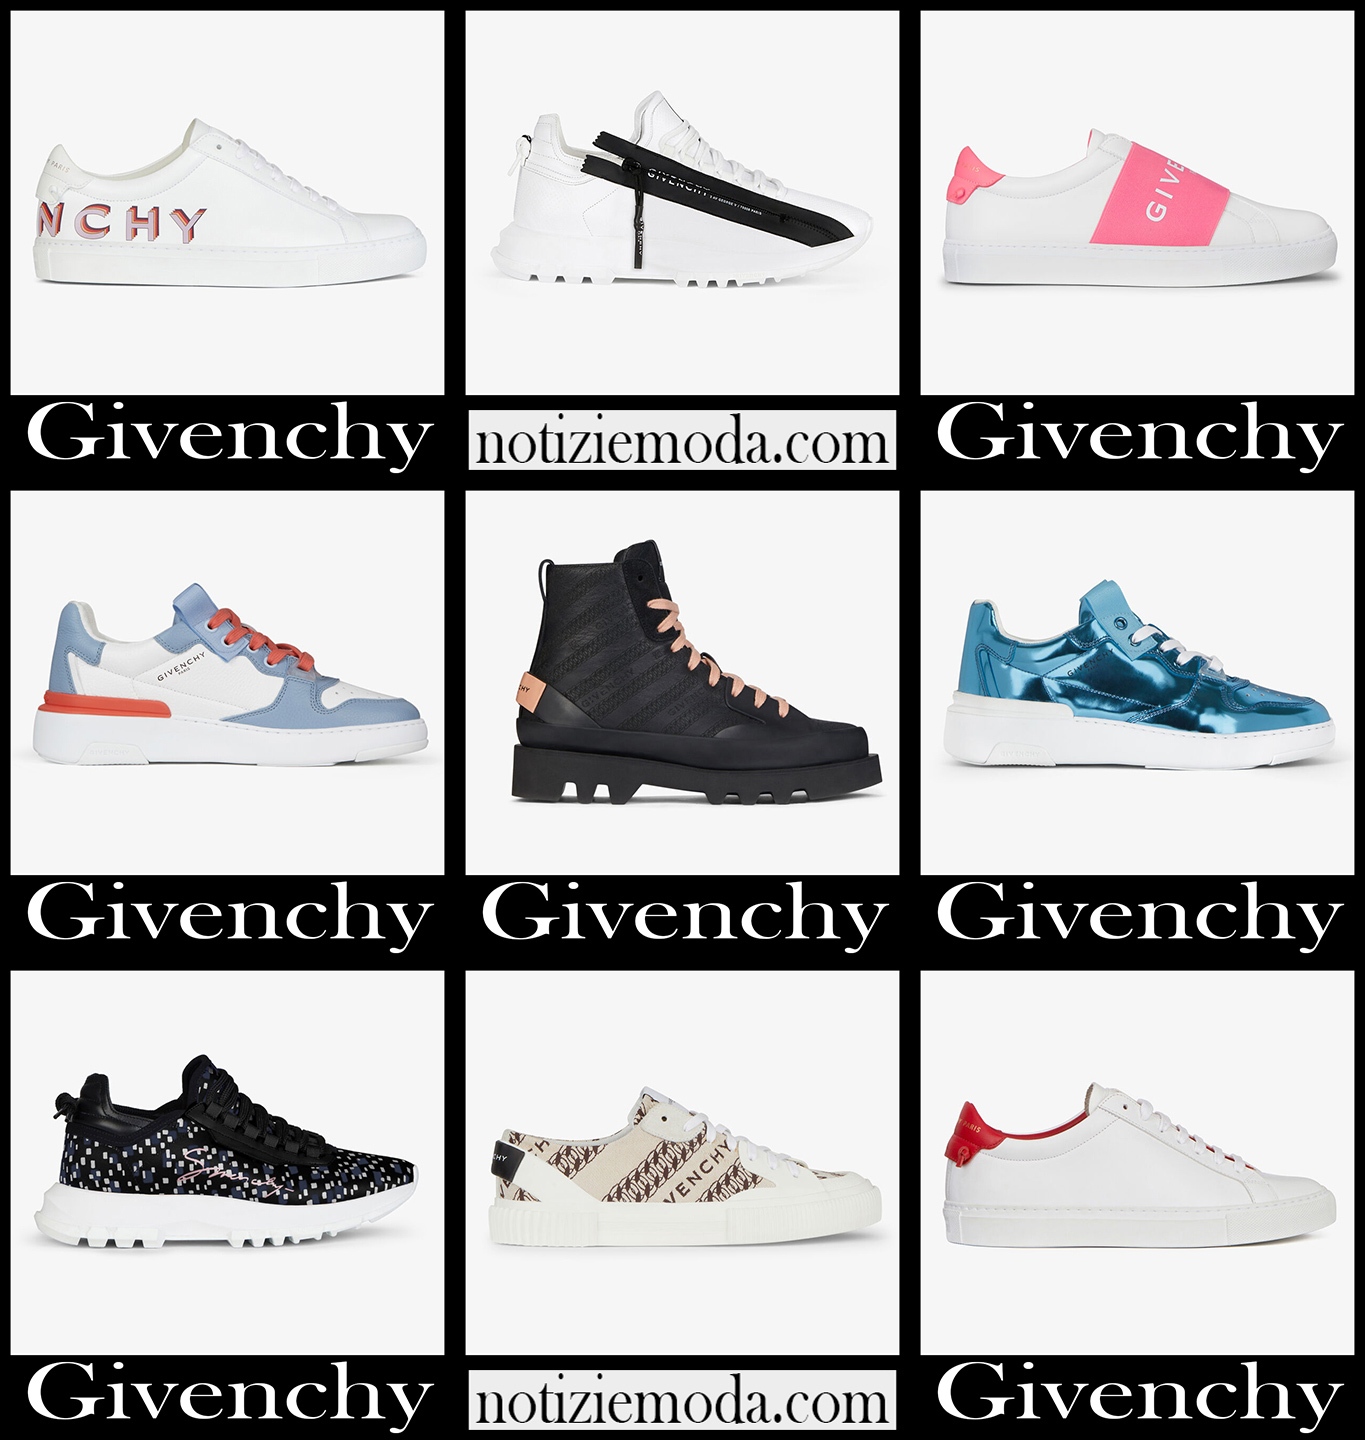 Nuovi arrivi sneakers Givenchy 2021 scarpe calzature donna